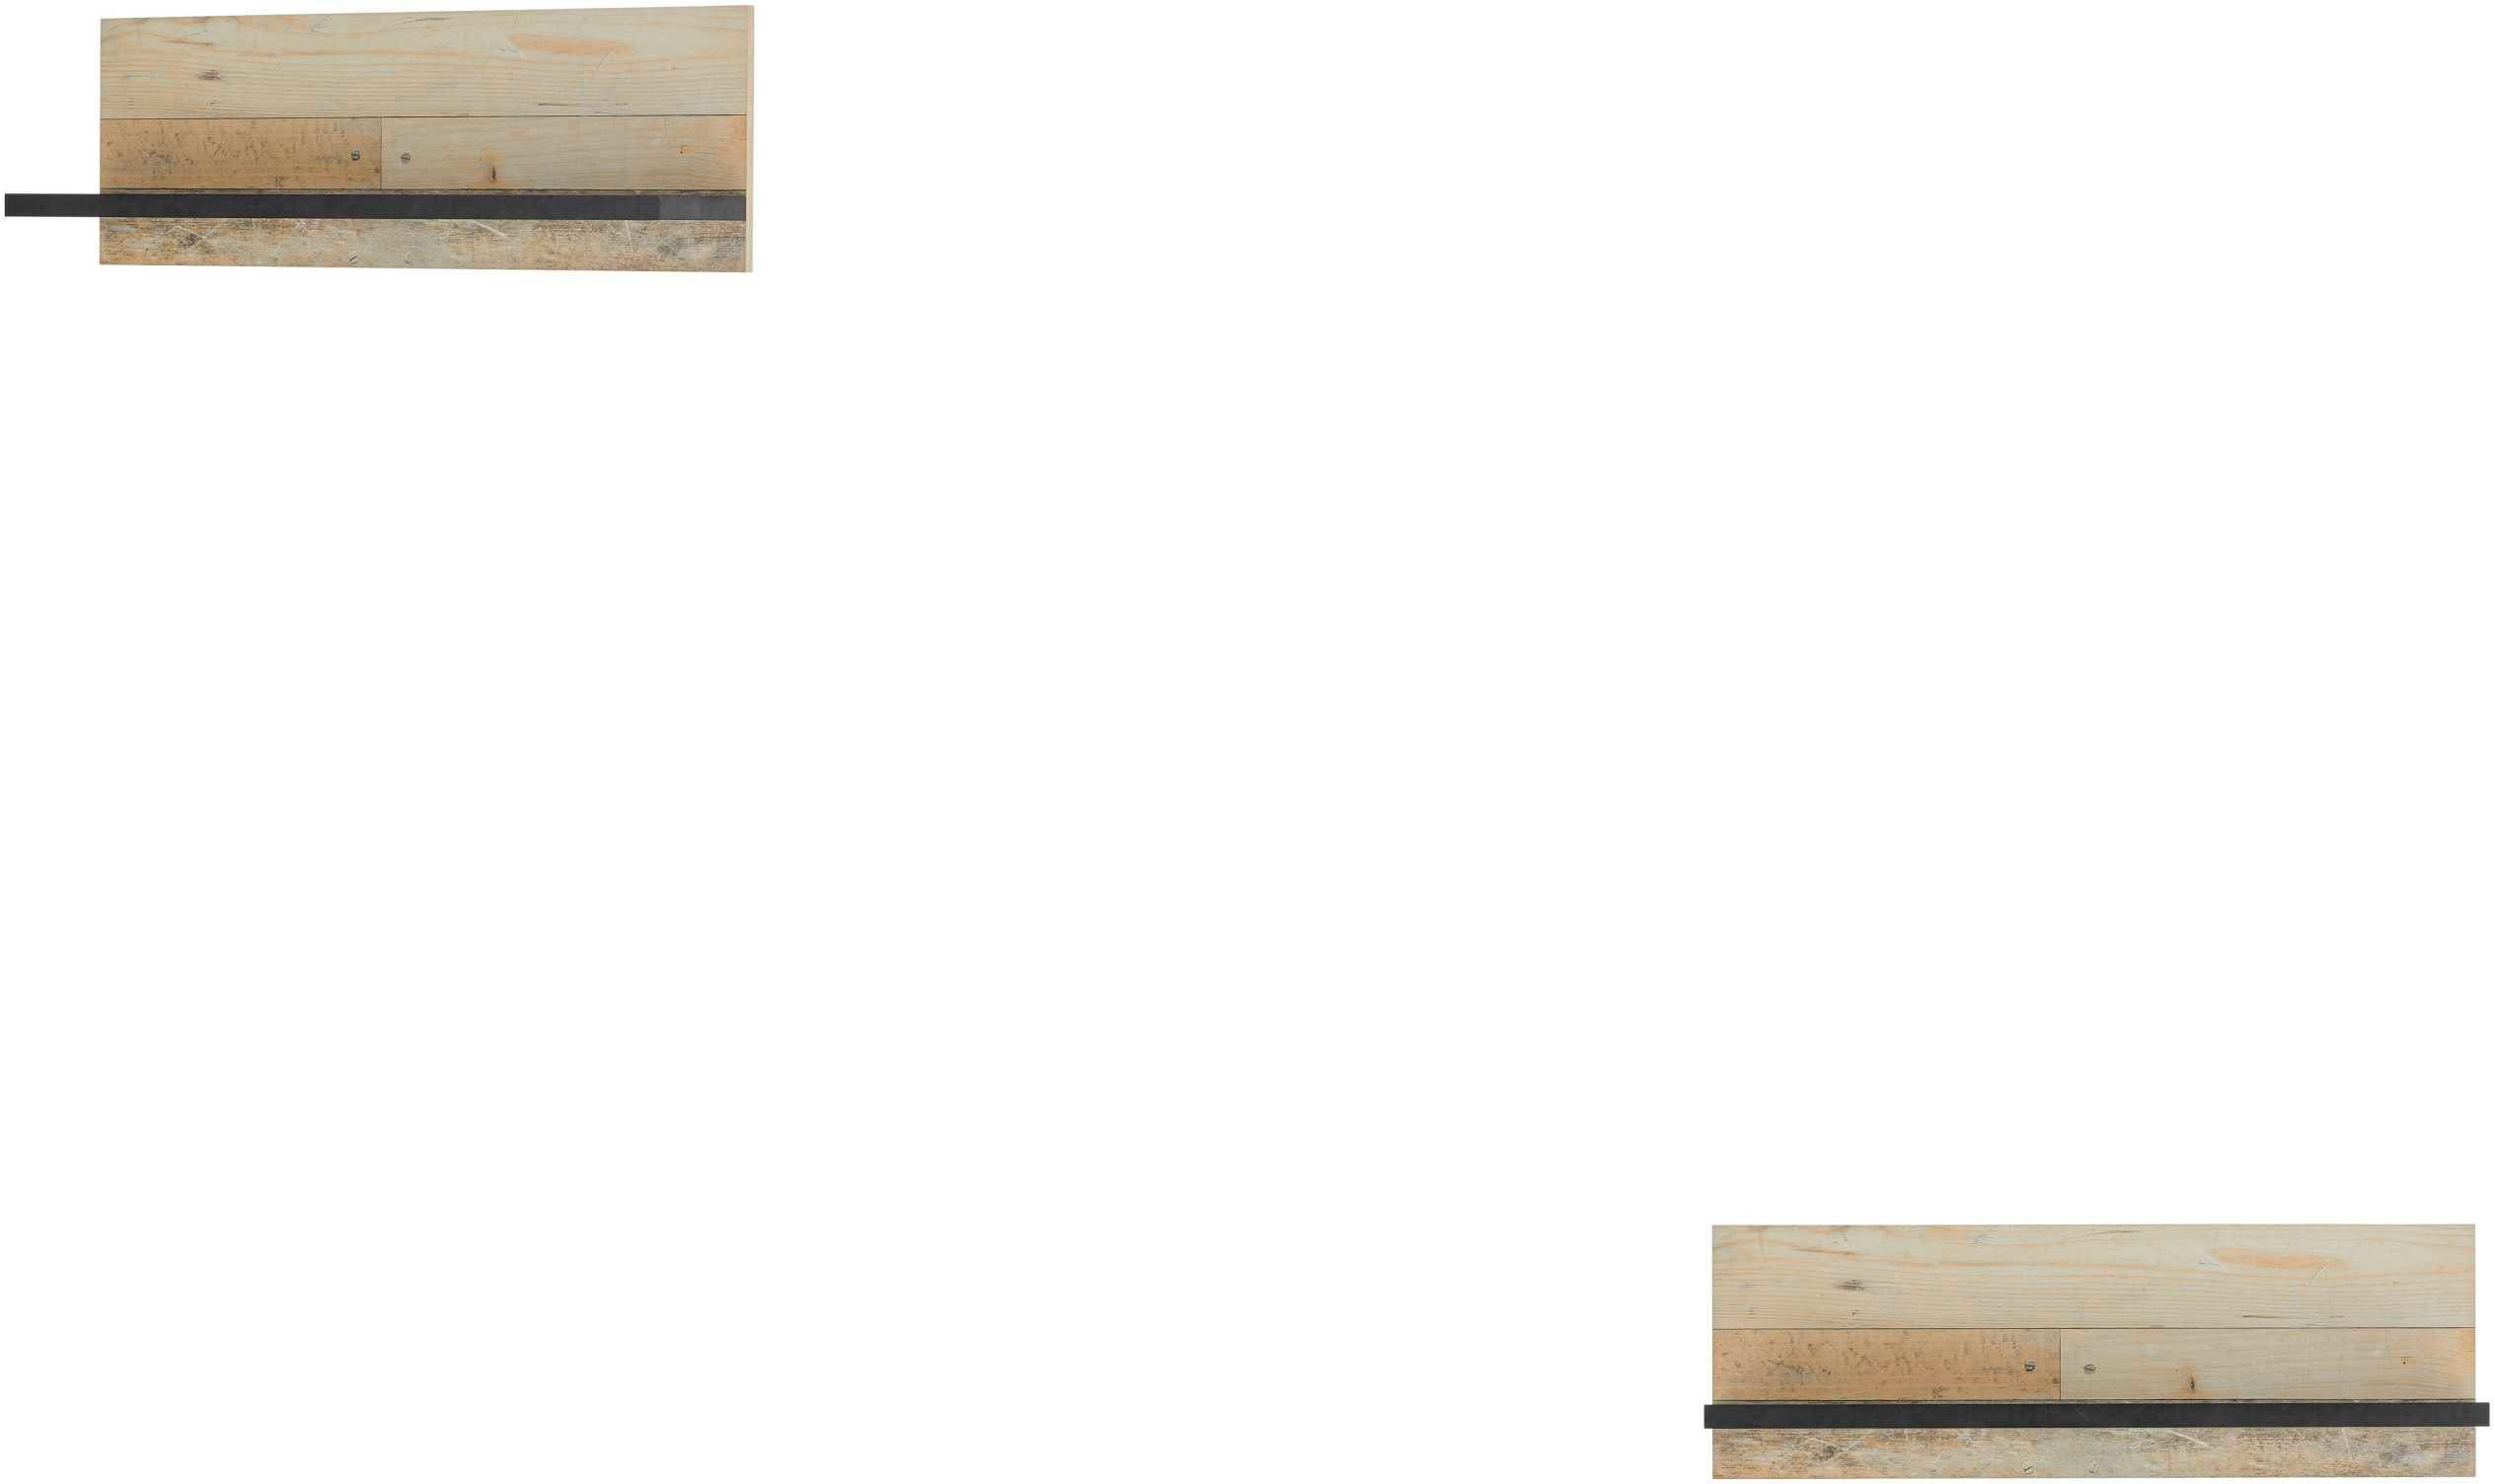 Home affaire Wandregal Sherwood, Breite 90 cm, in modernem Holz Dekor, 28 mm starke Ablageböden